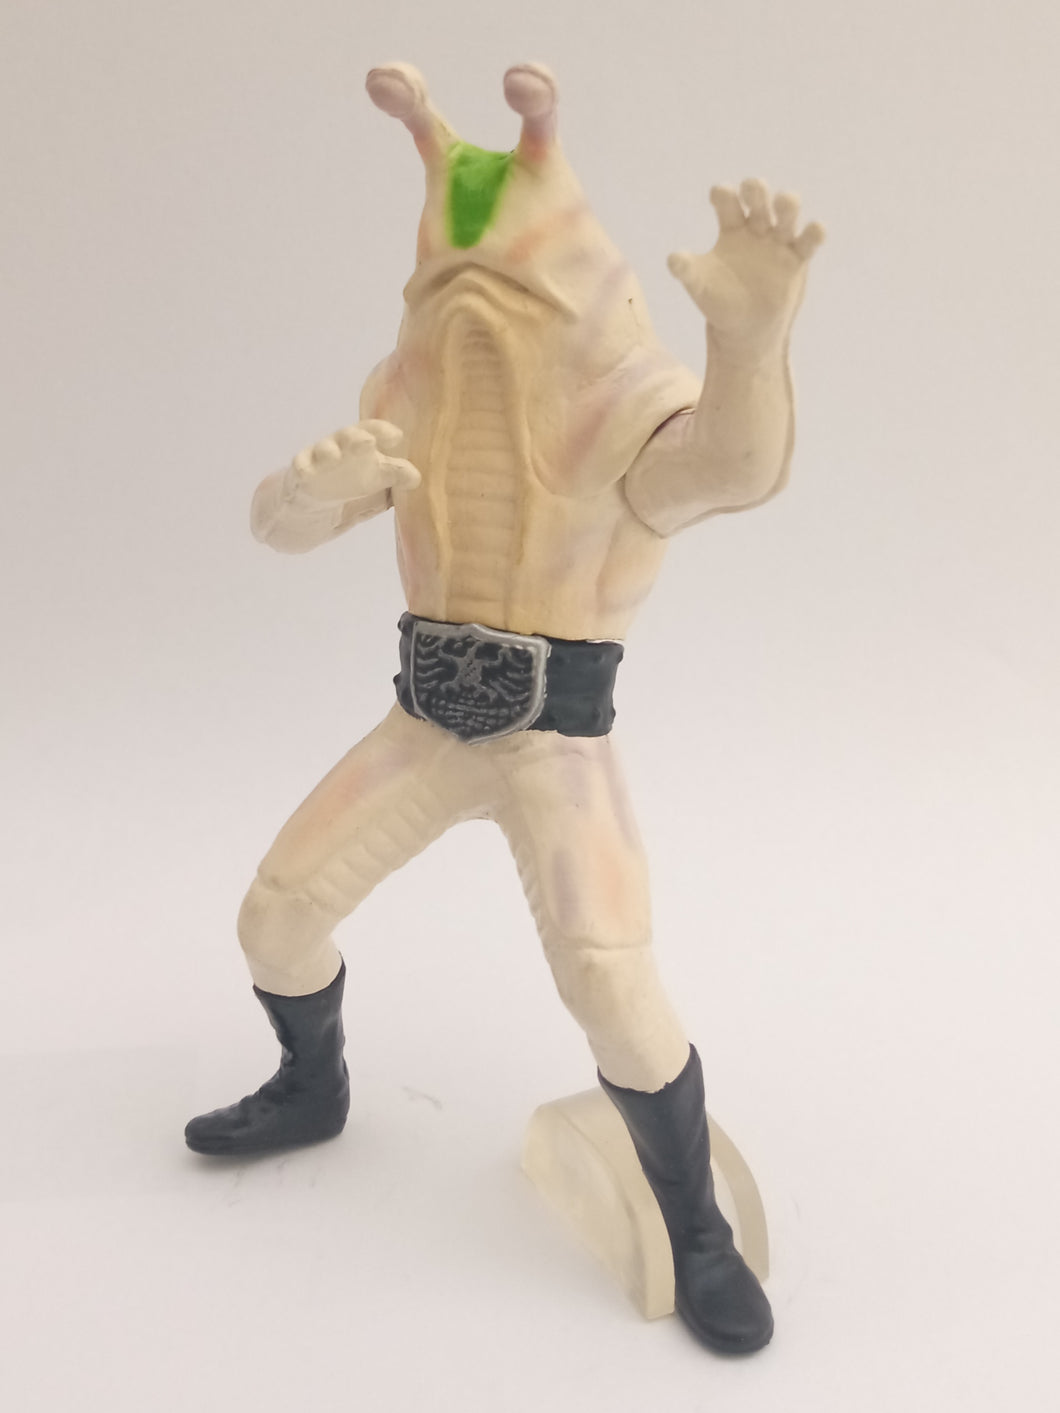 Kamen (Masked) Rider HG Gashapon Figure